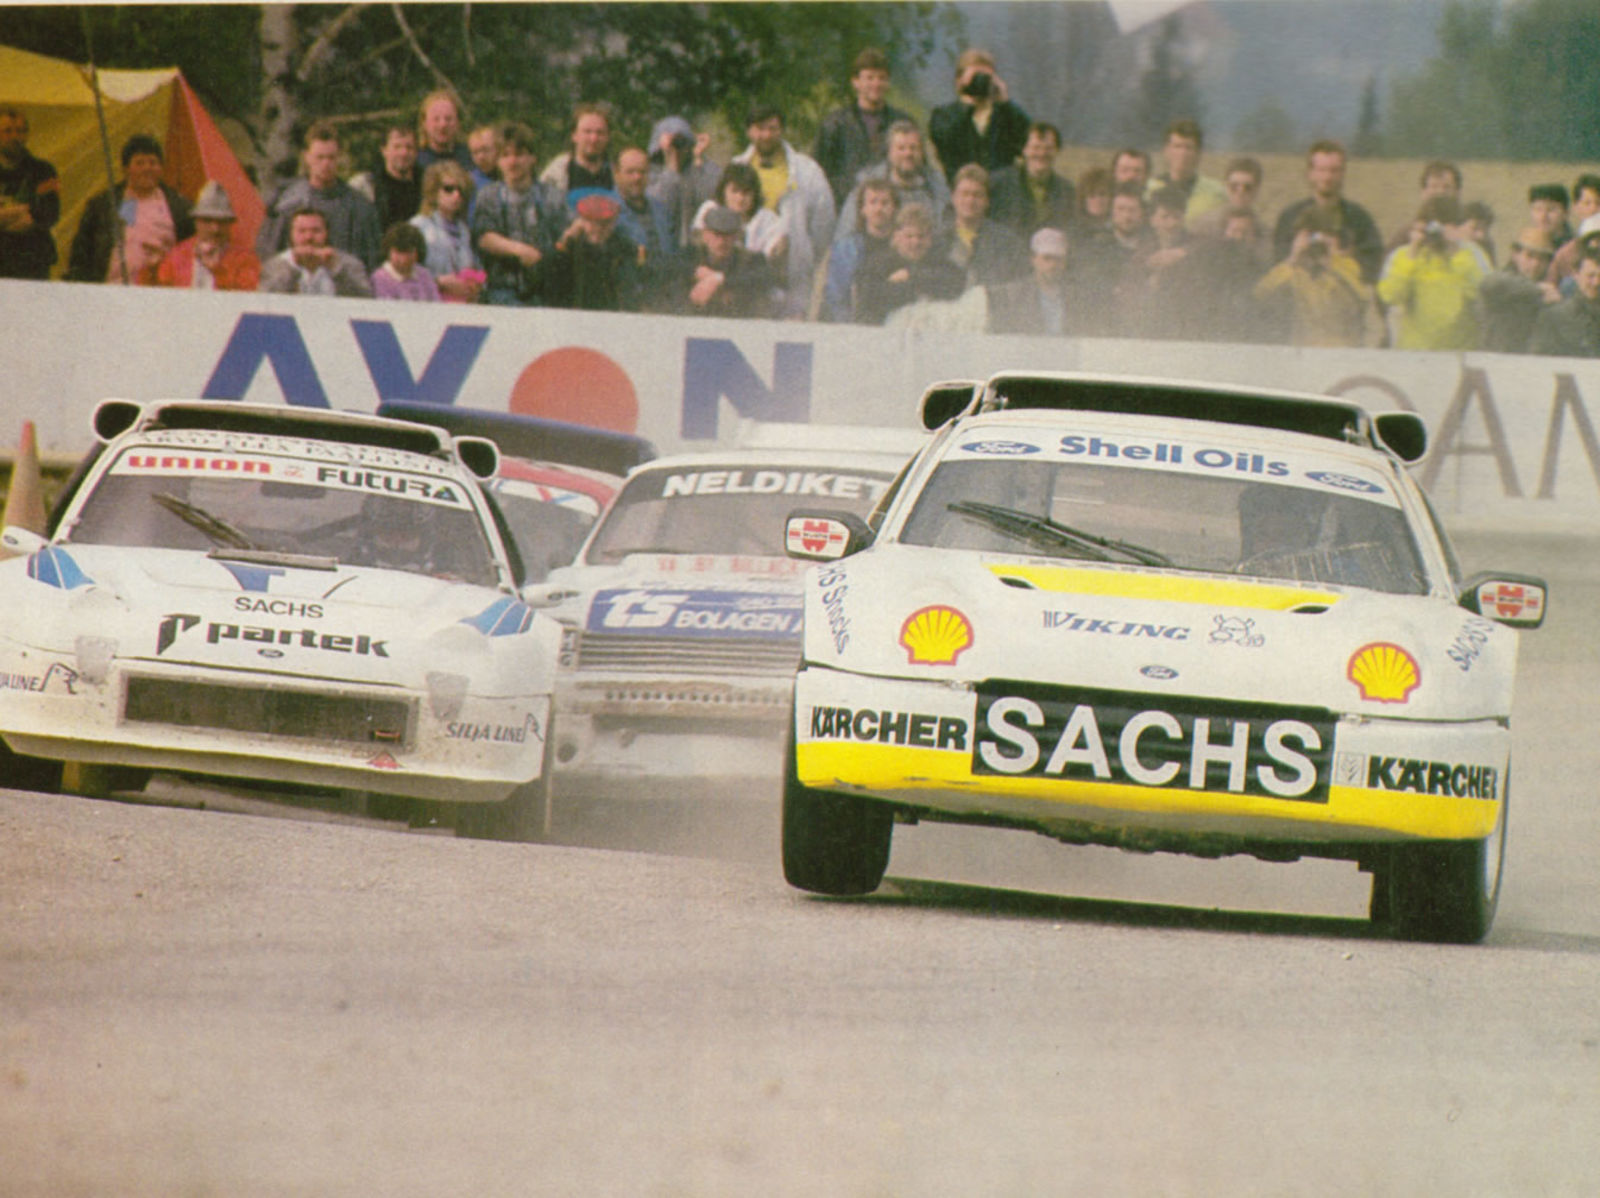 Illustration for article titled 1982-1992 FIA European Rallycross Championship Division 2 Photodump